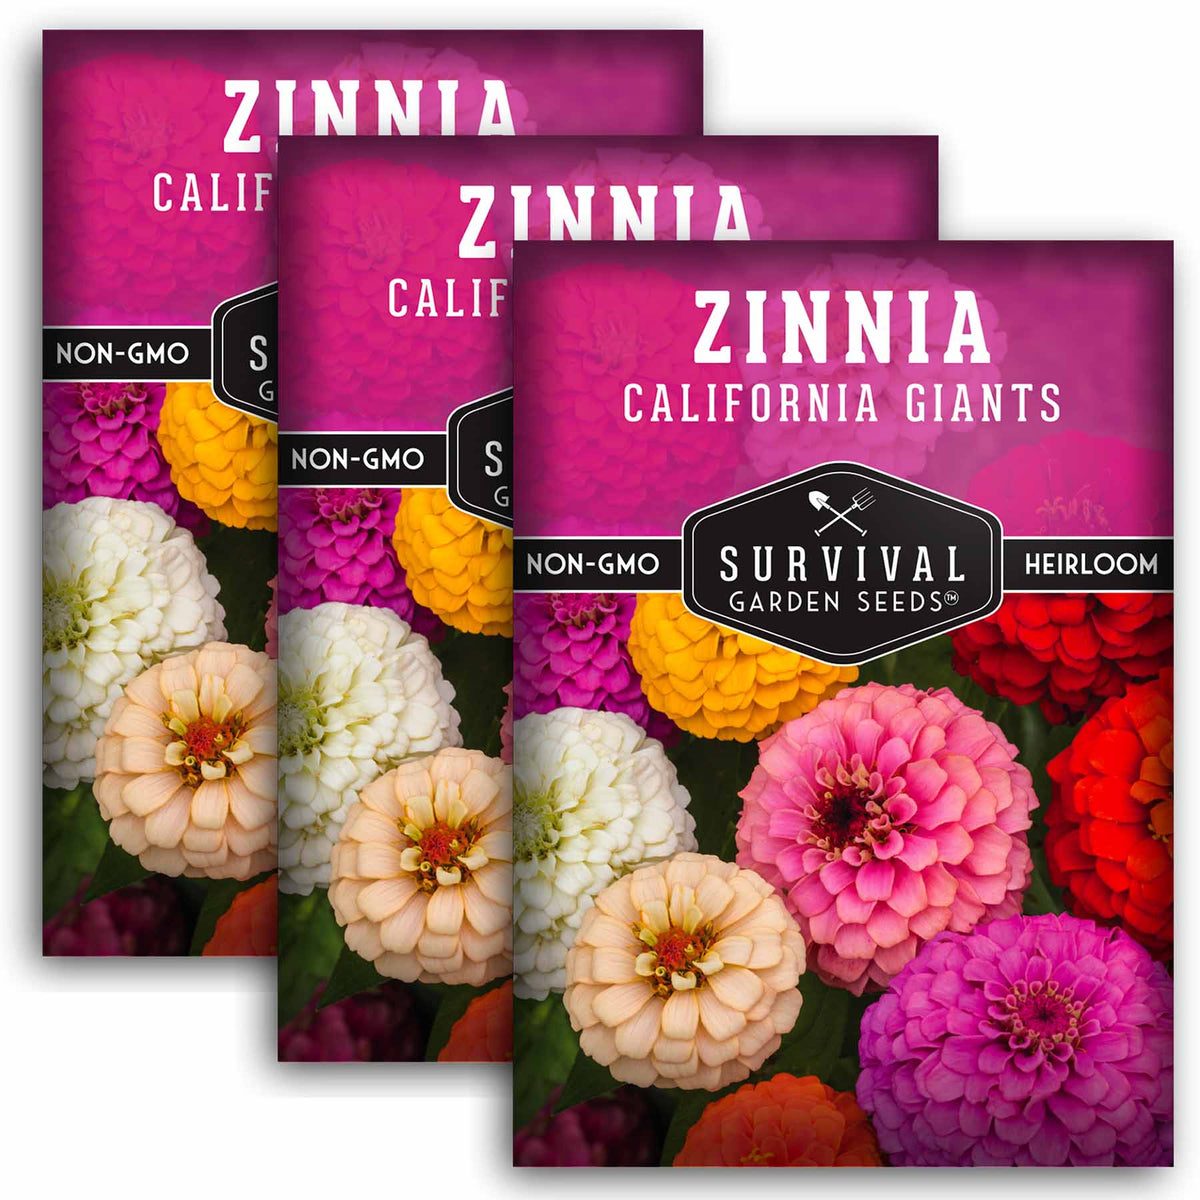 3 Packets of California Giants Zinnia seeds